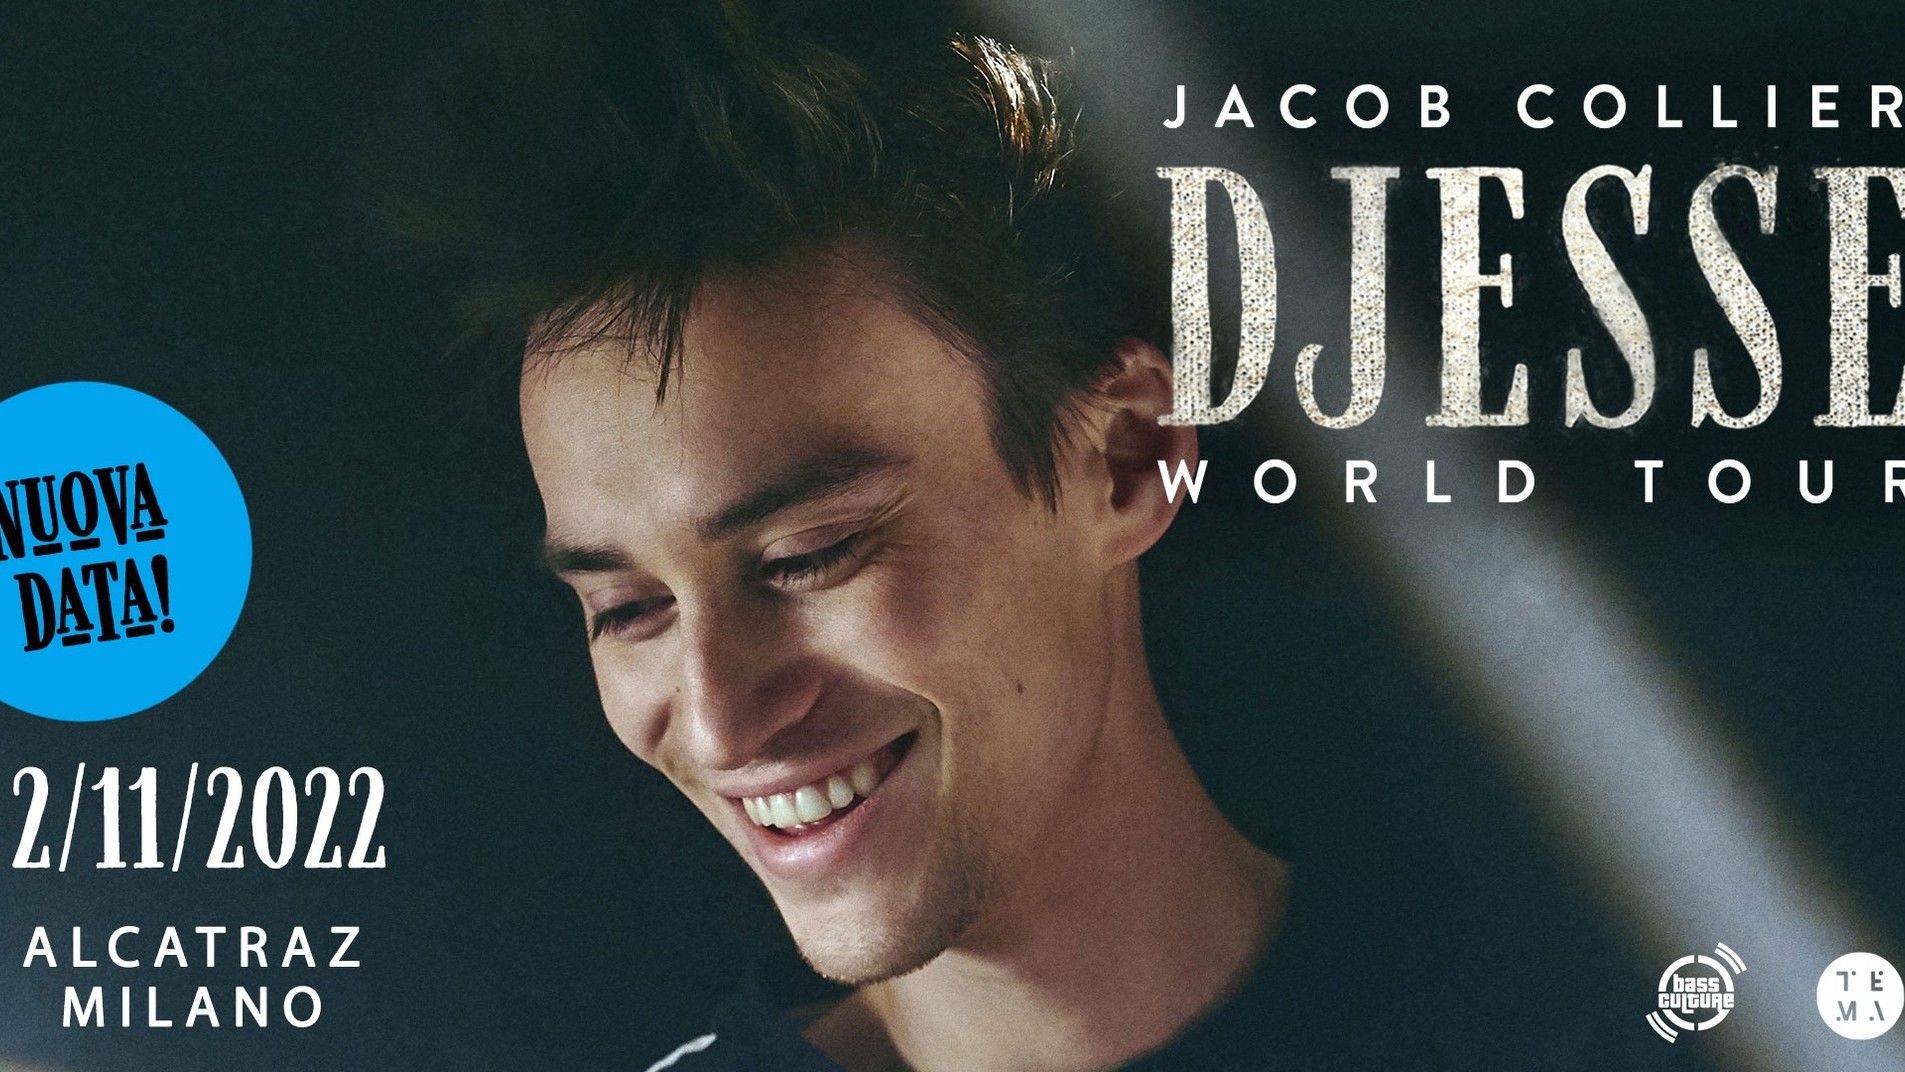 Jacob Collier "Djesse World Tour"